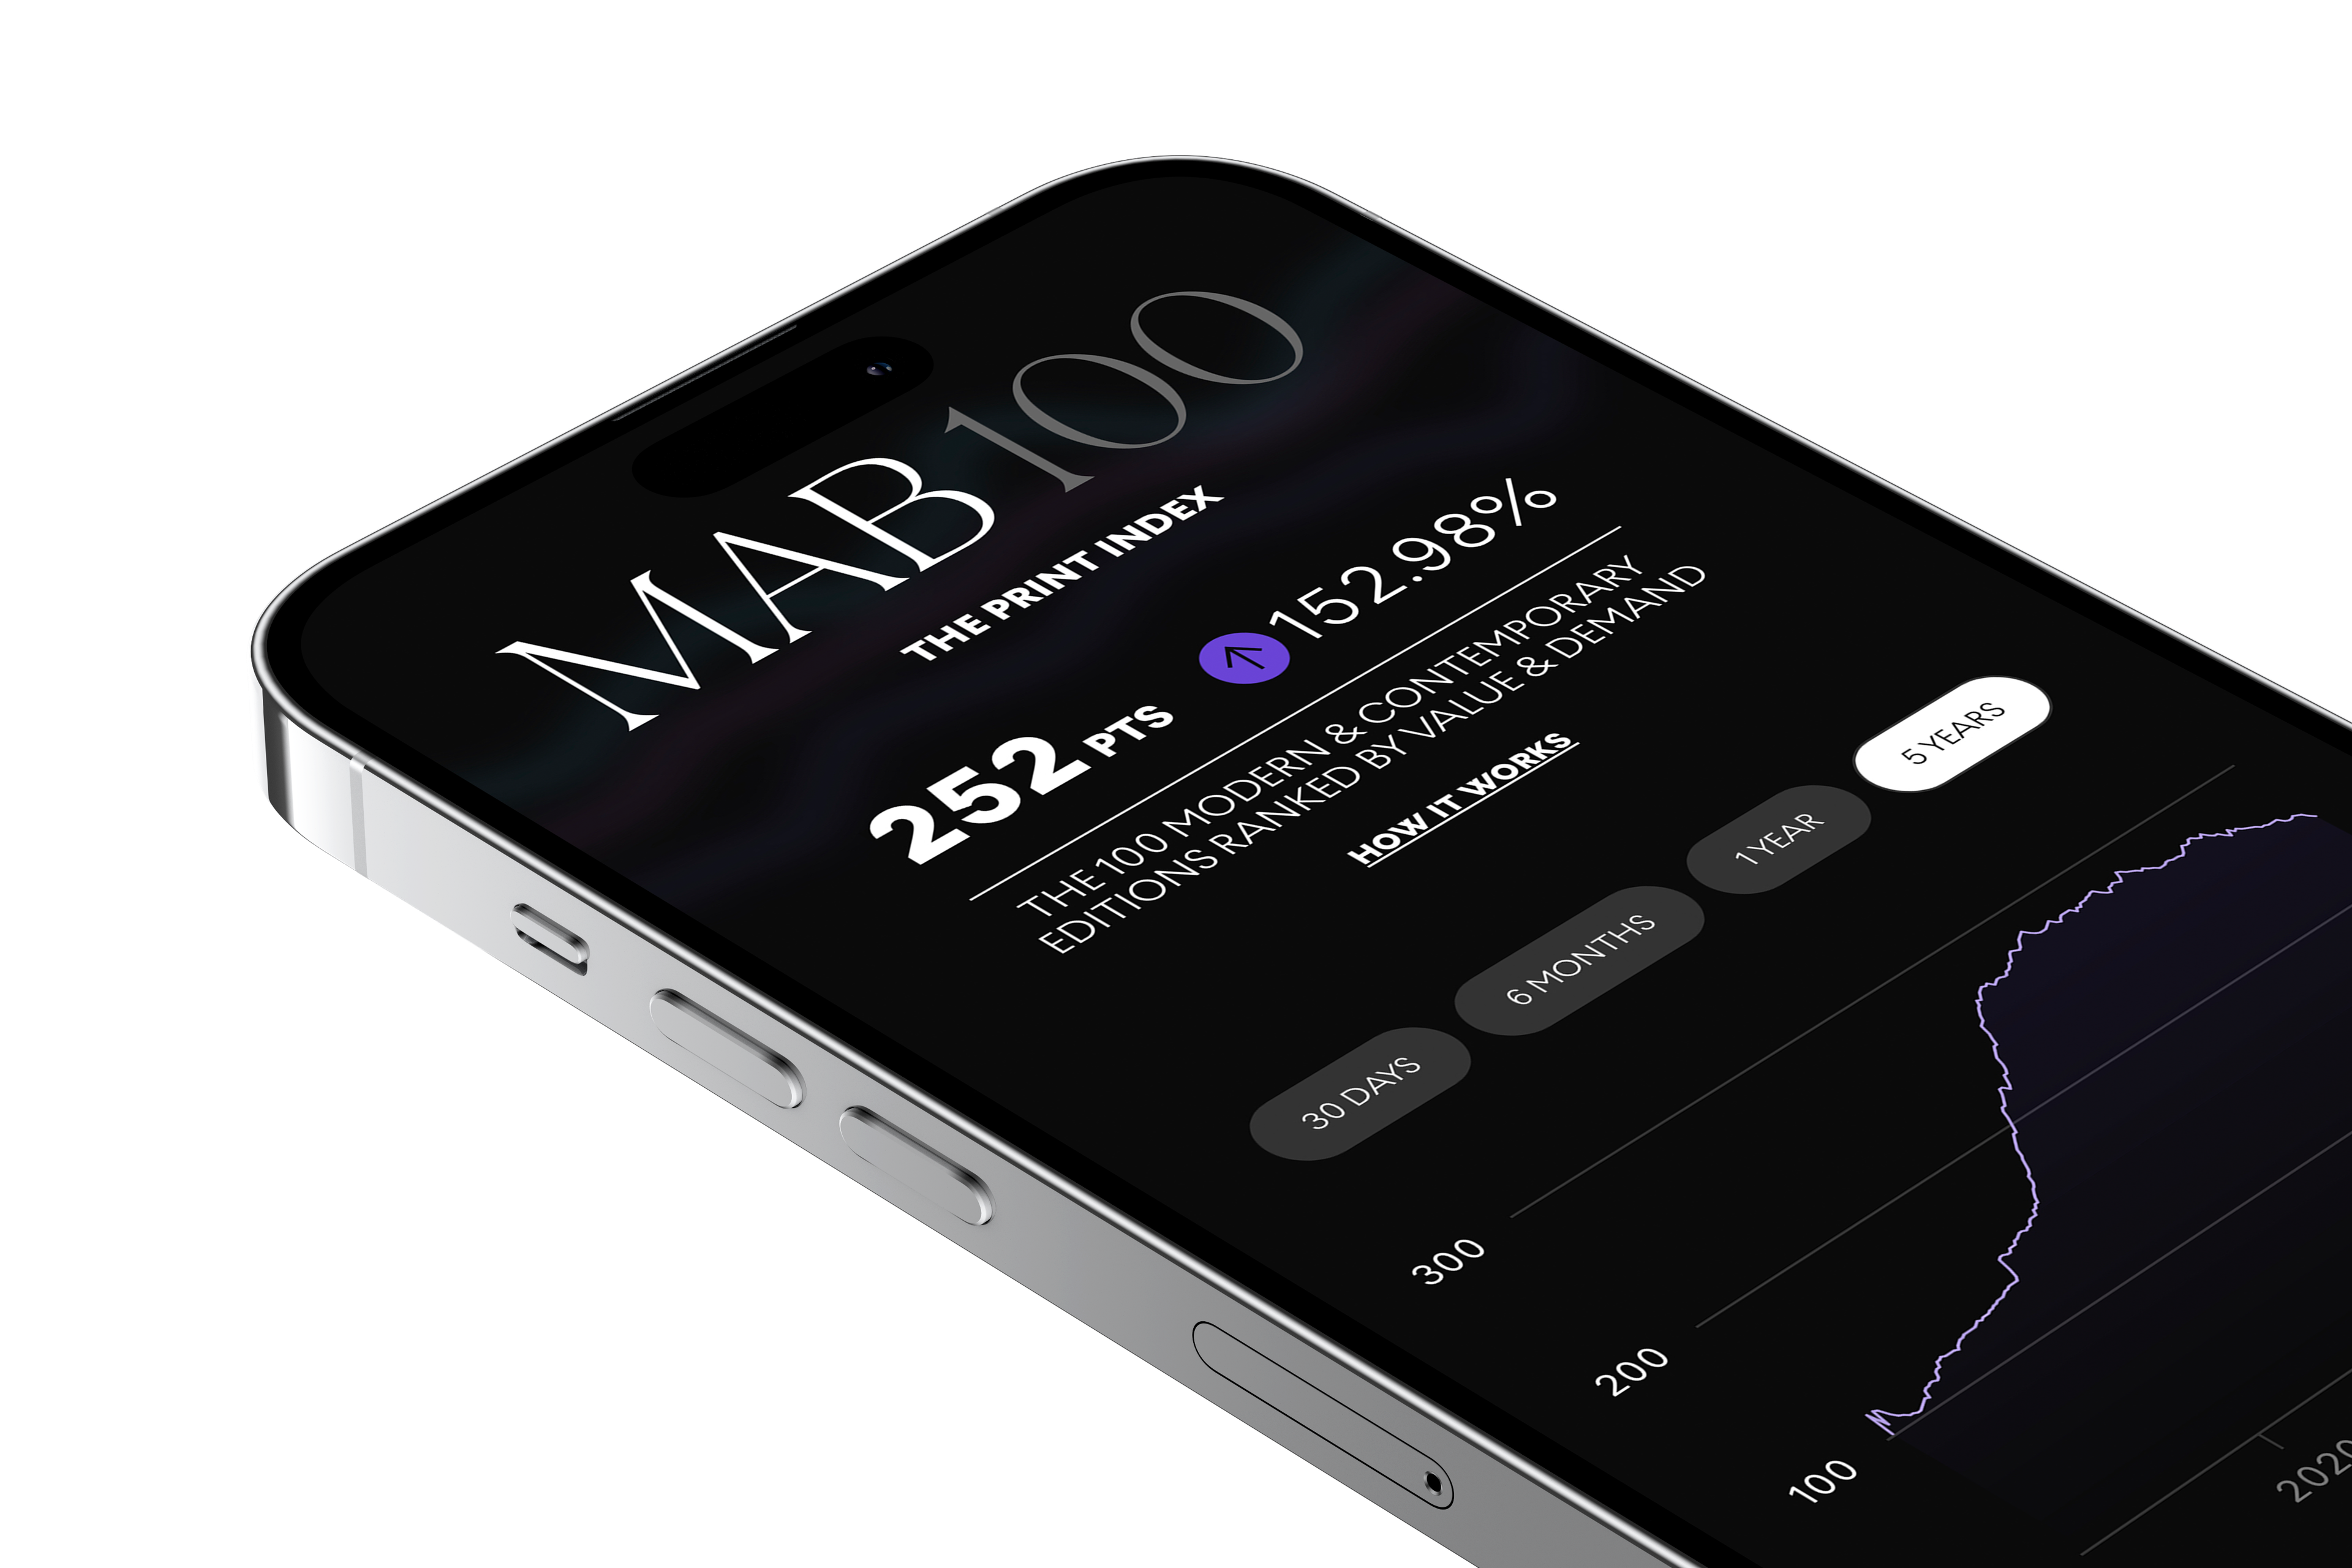 MAB100 by MyArtBroker shown on a phone screen